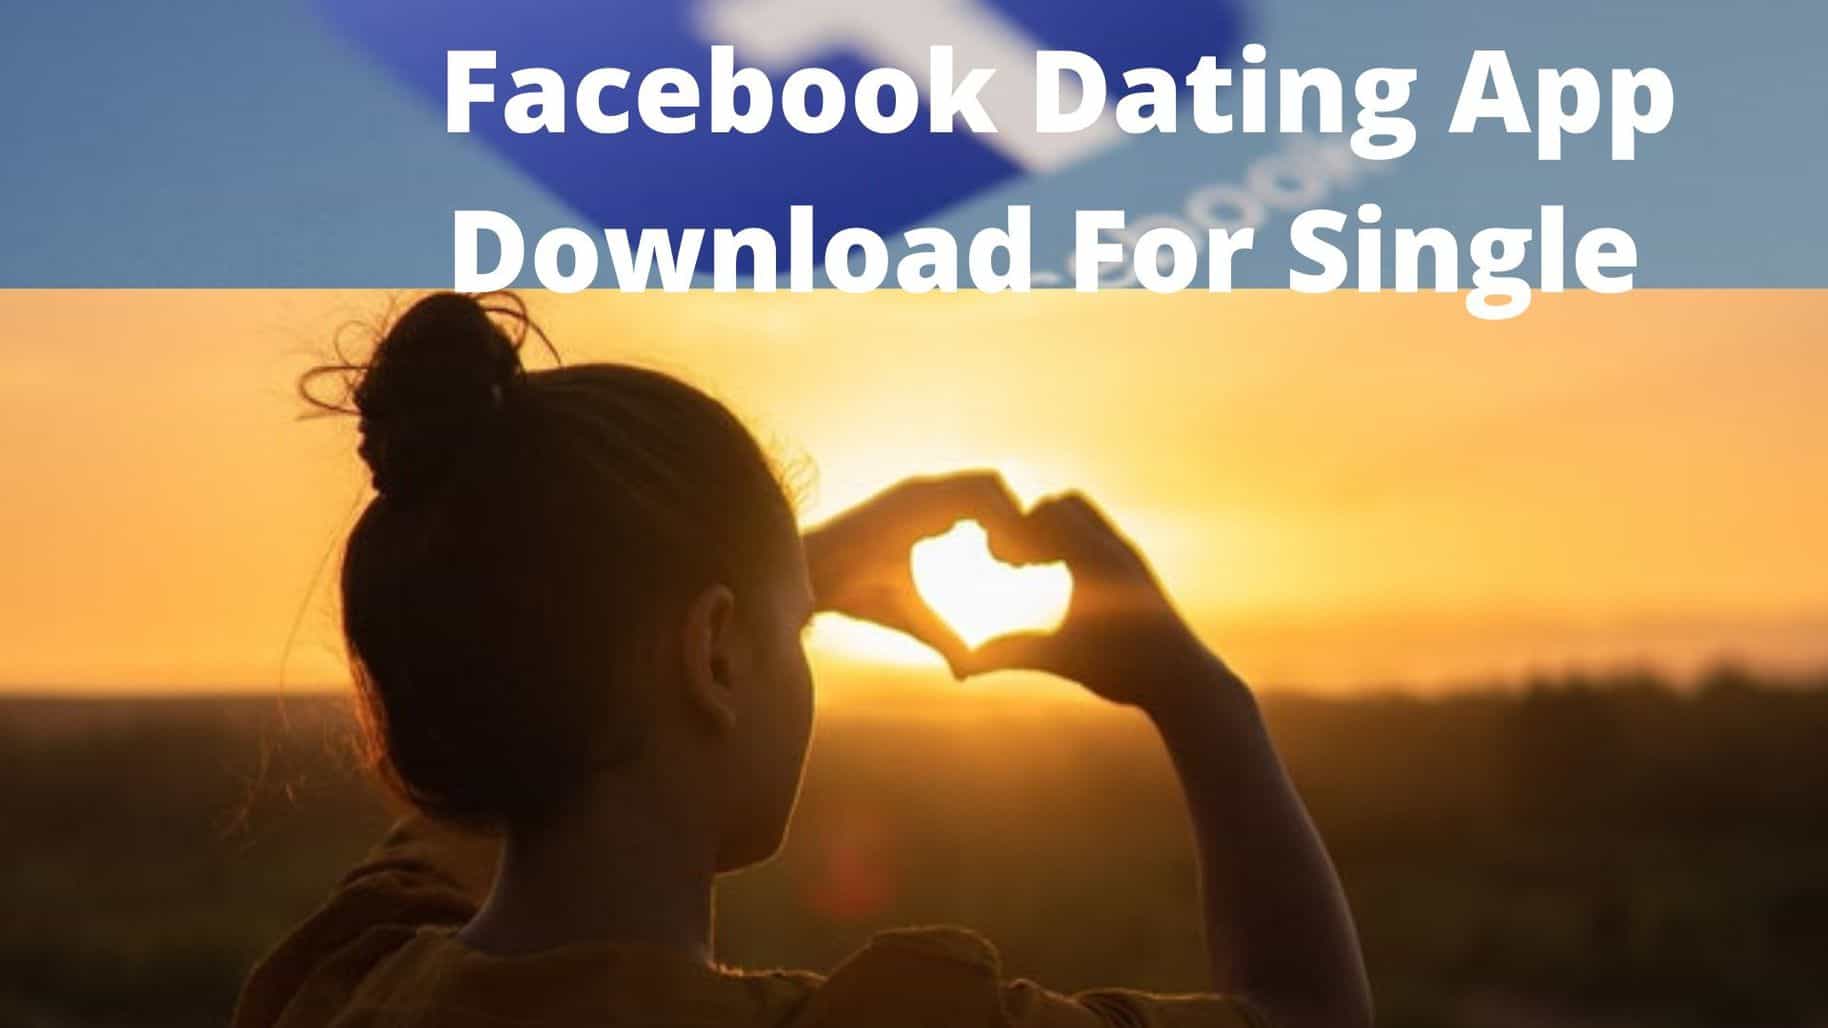 Facebook Dating App Download For Single